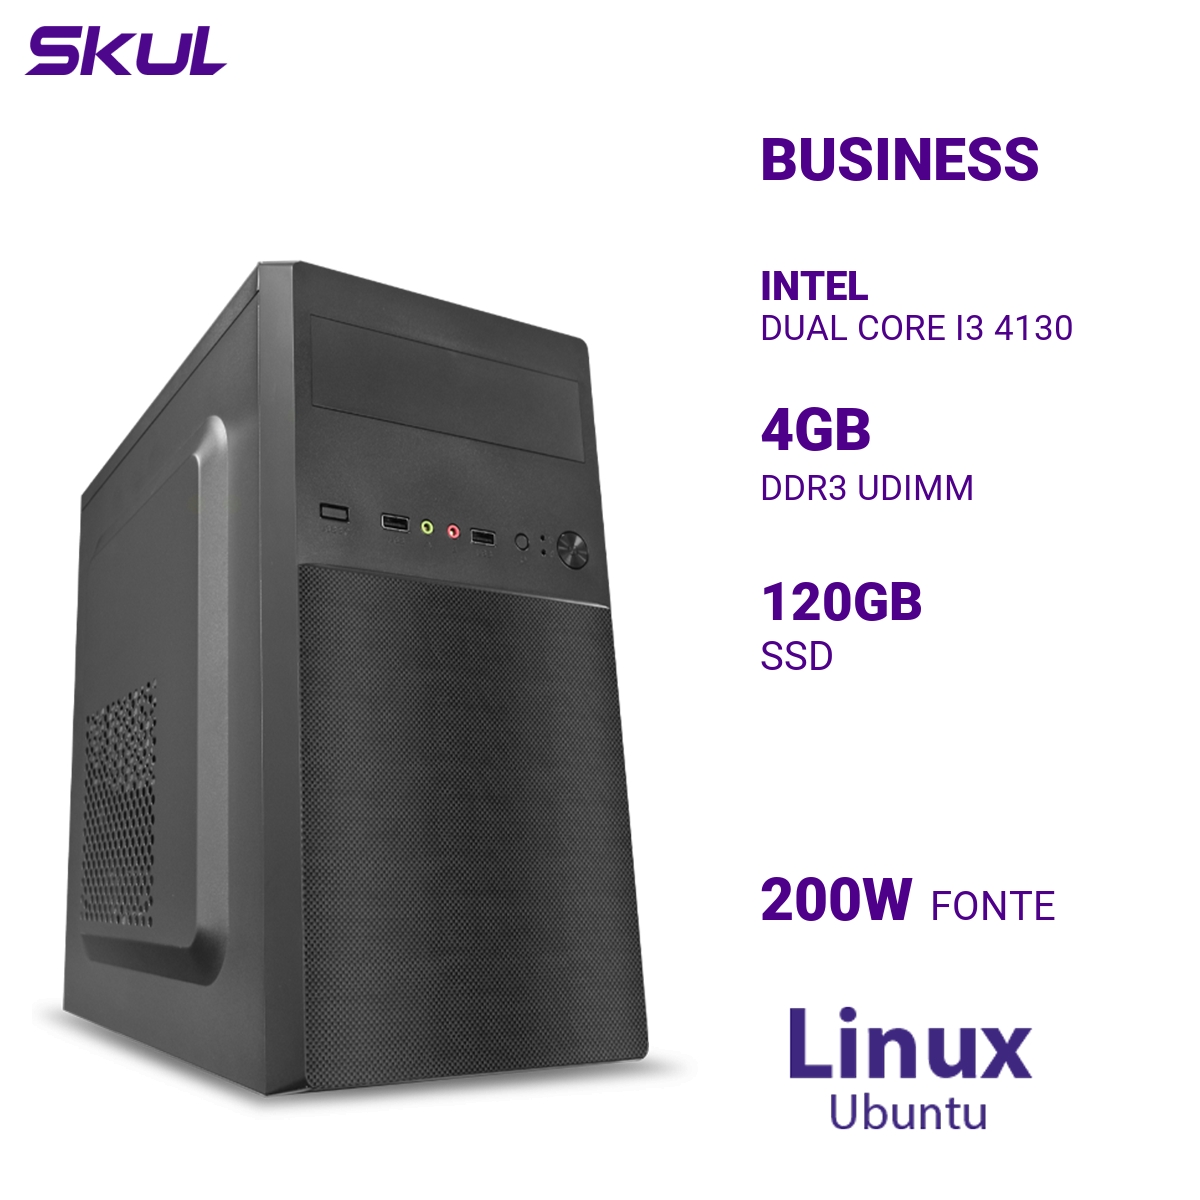 Computador Business B300 Dual Core I3 4130 Mem 4gb Ddr3 Ssd 120gb Fonte 200w Linux Ubuntu